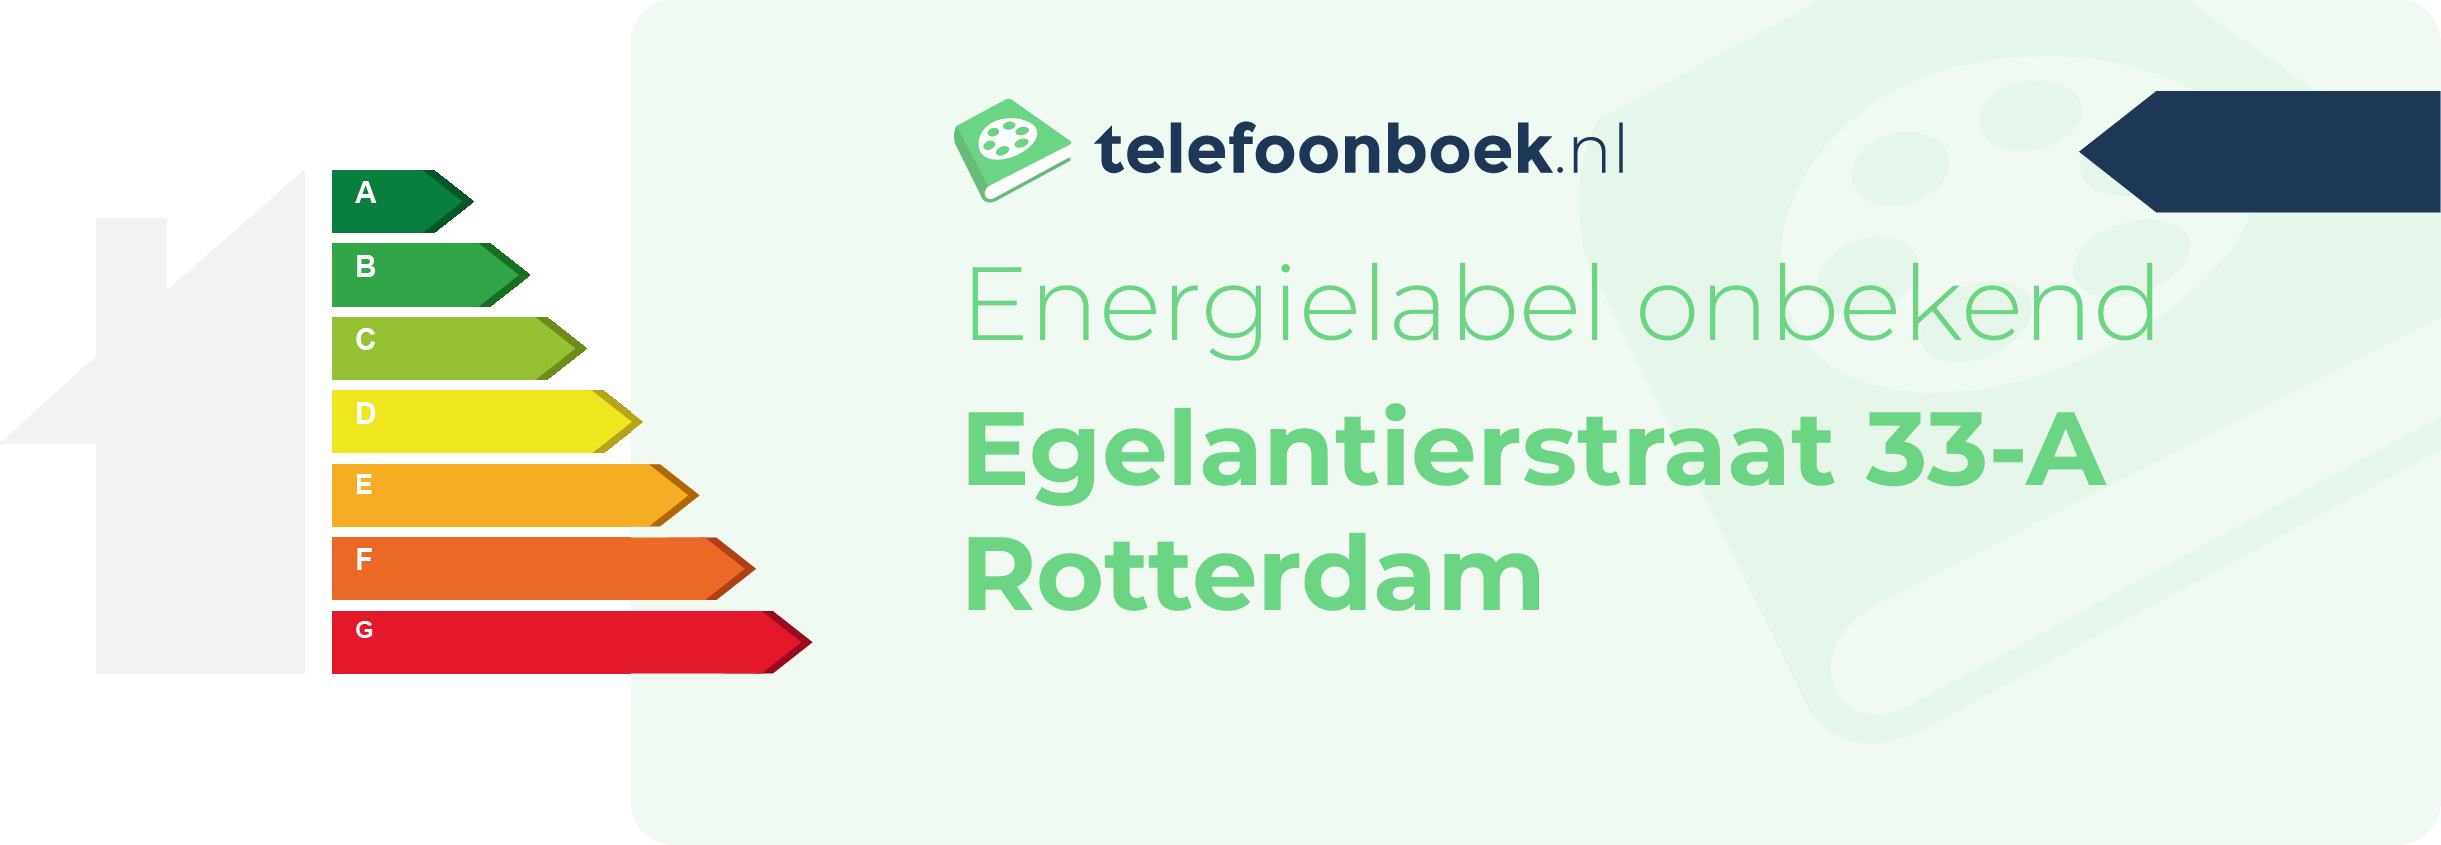 Energielabel Egelantierstraat 33-A Rotterdam